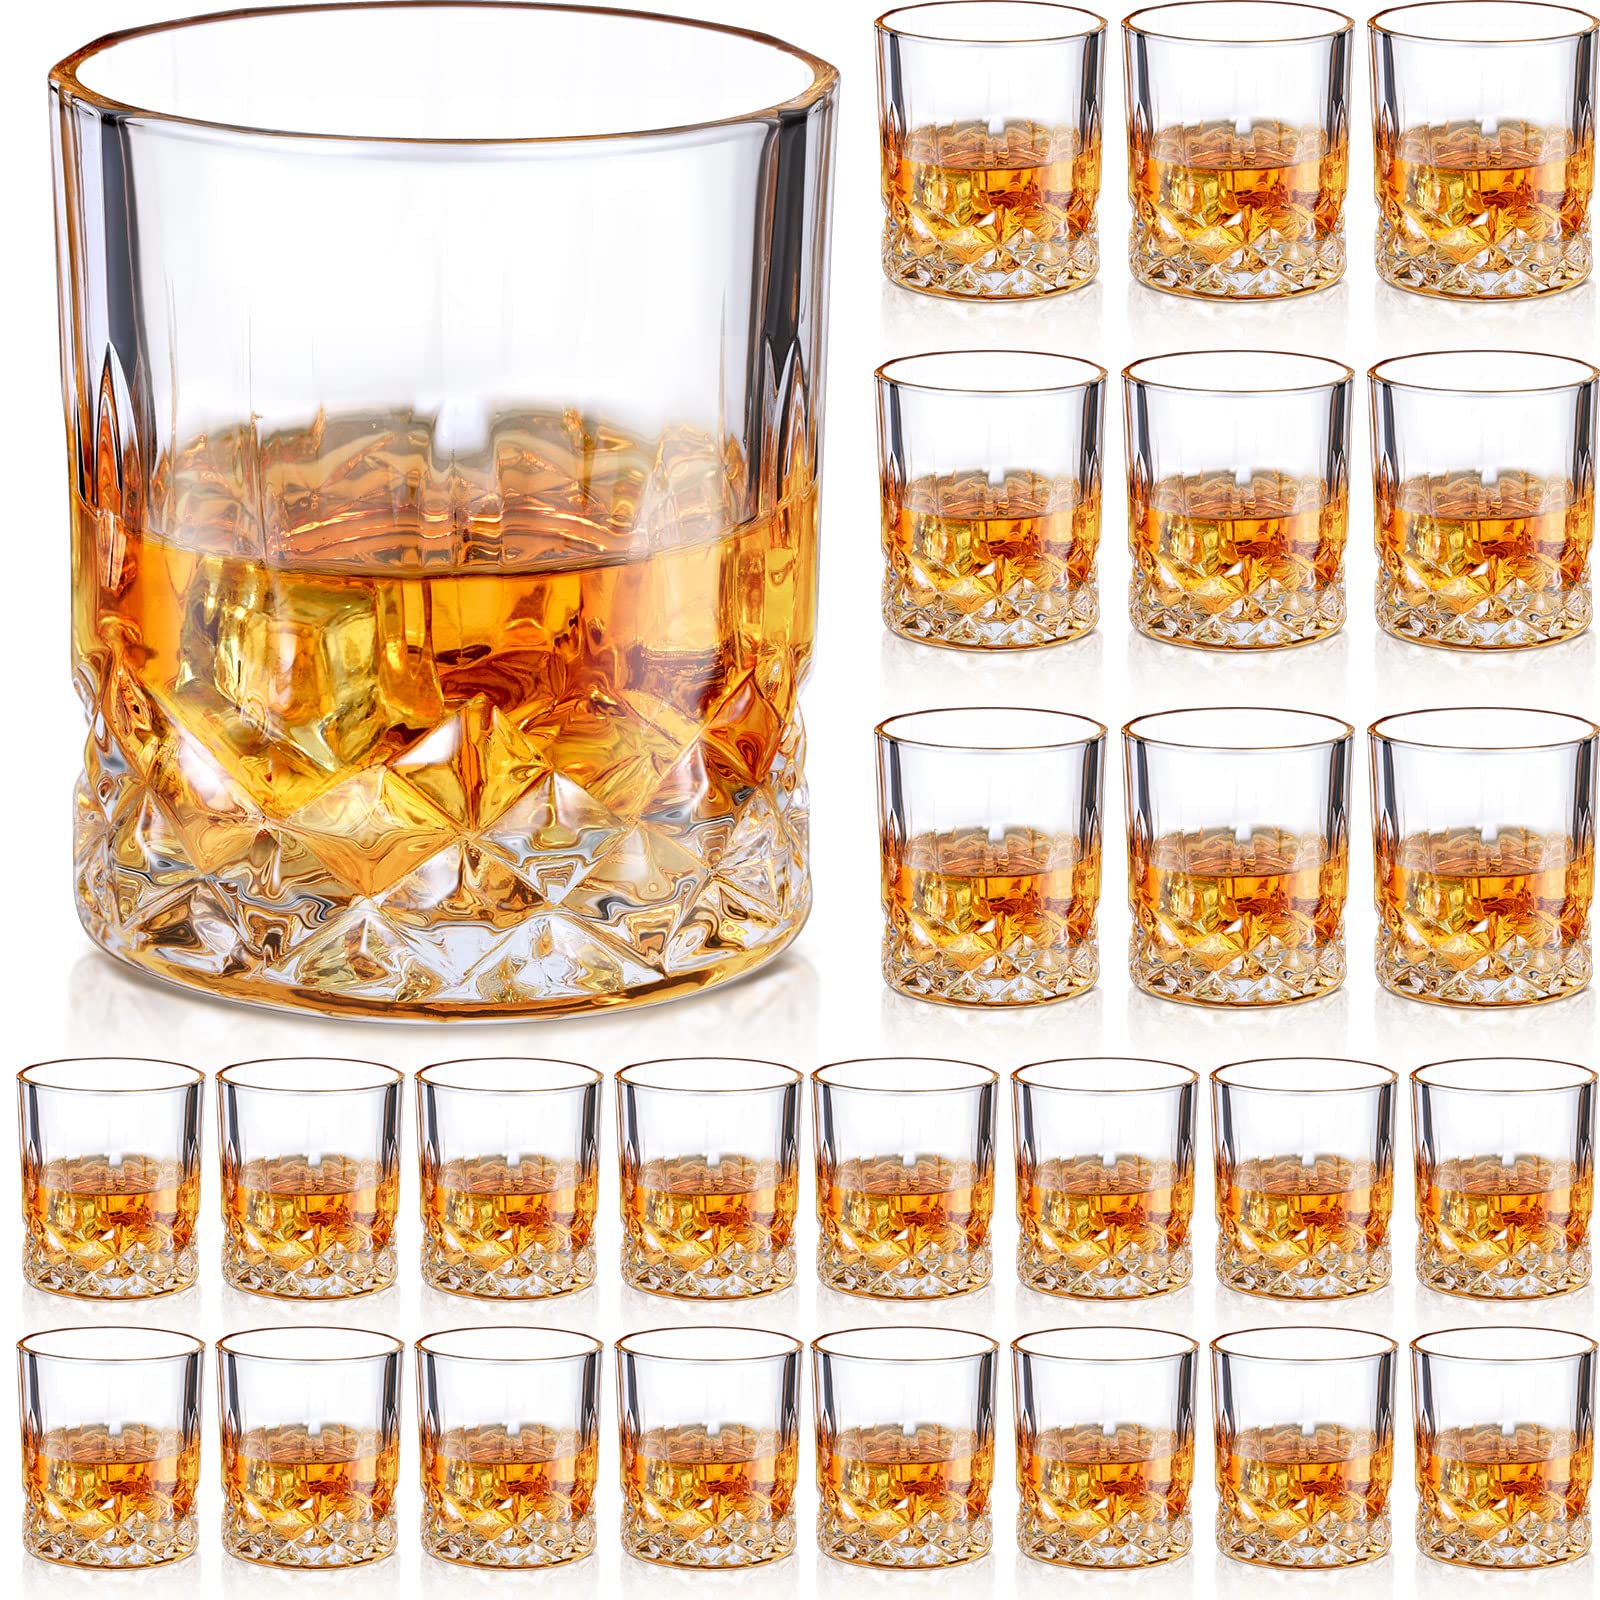 18 Pack Old Fashioned Whiskey Glasses 10 oz Bourbon Glass Cocktail Glasses Rocks Glasses for Whiskey Bourbon Liquor and Cocktail Drinks Gift for Men Women Home Bar (Elegant)